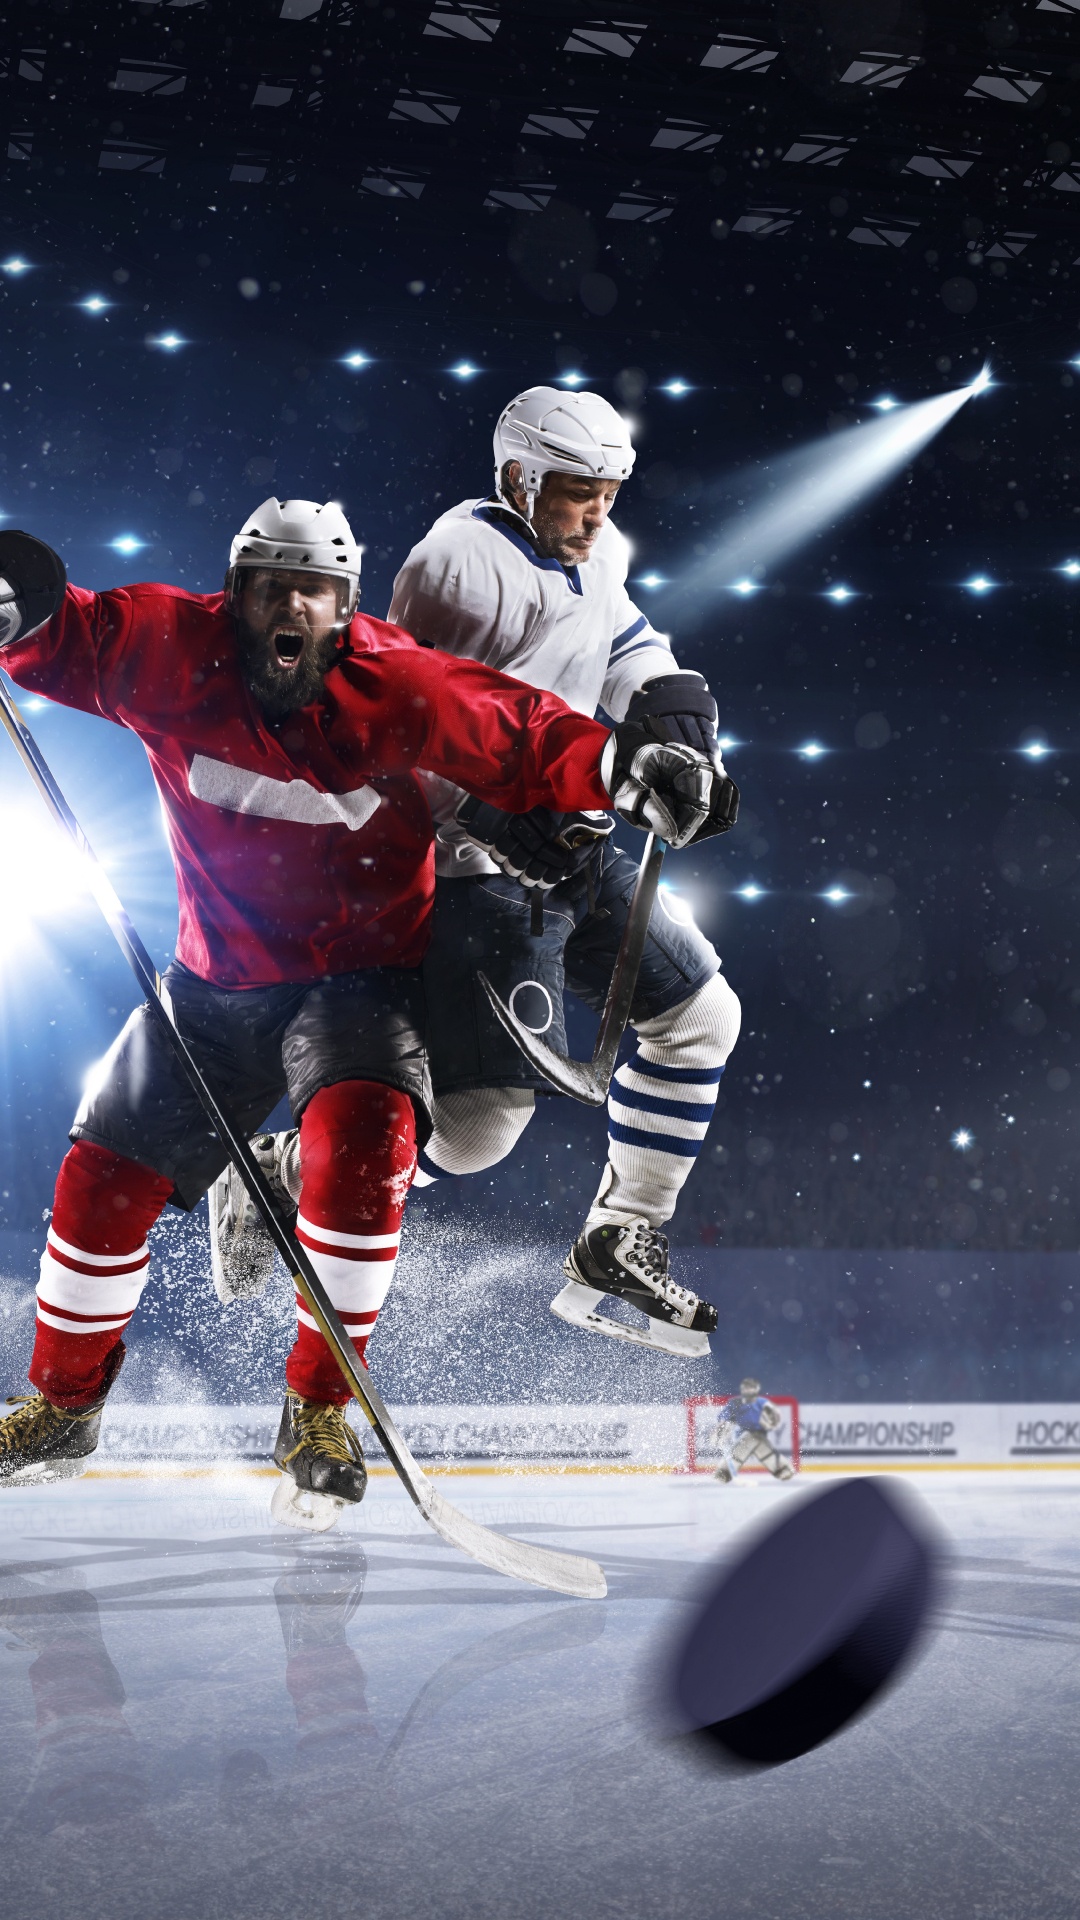 Ice Hockey Players on Ice Hockey Field. Wallpaper in 1080x1920 Resolution